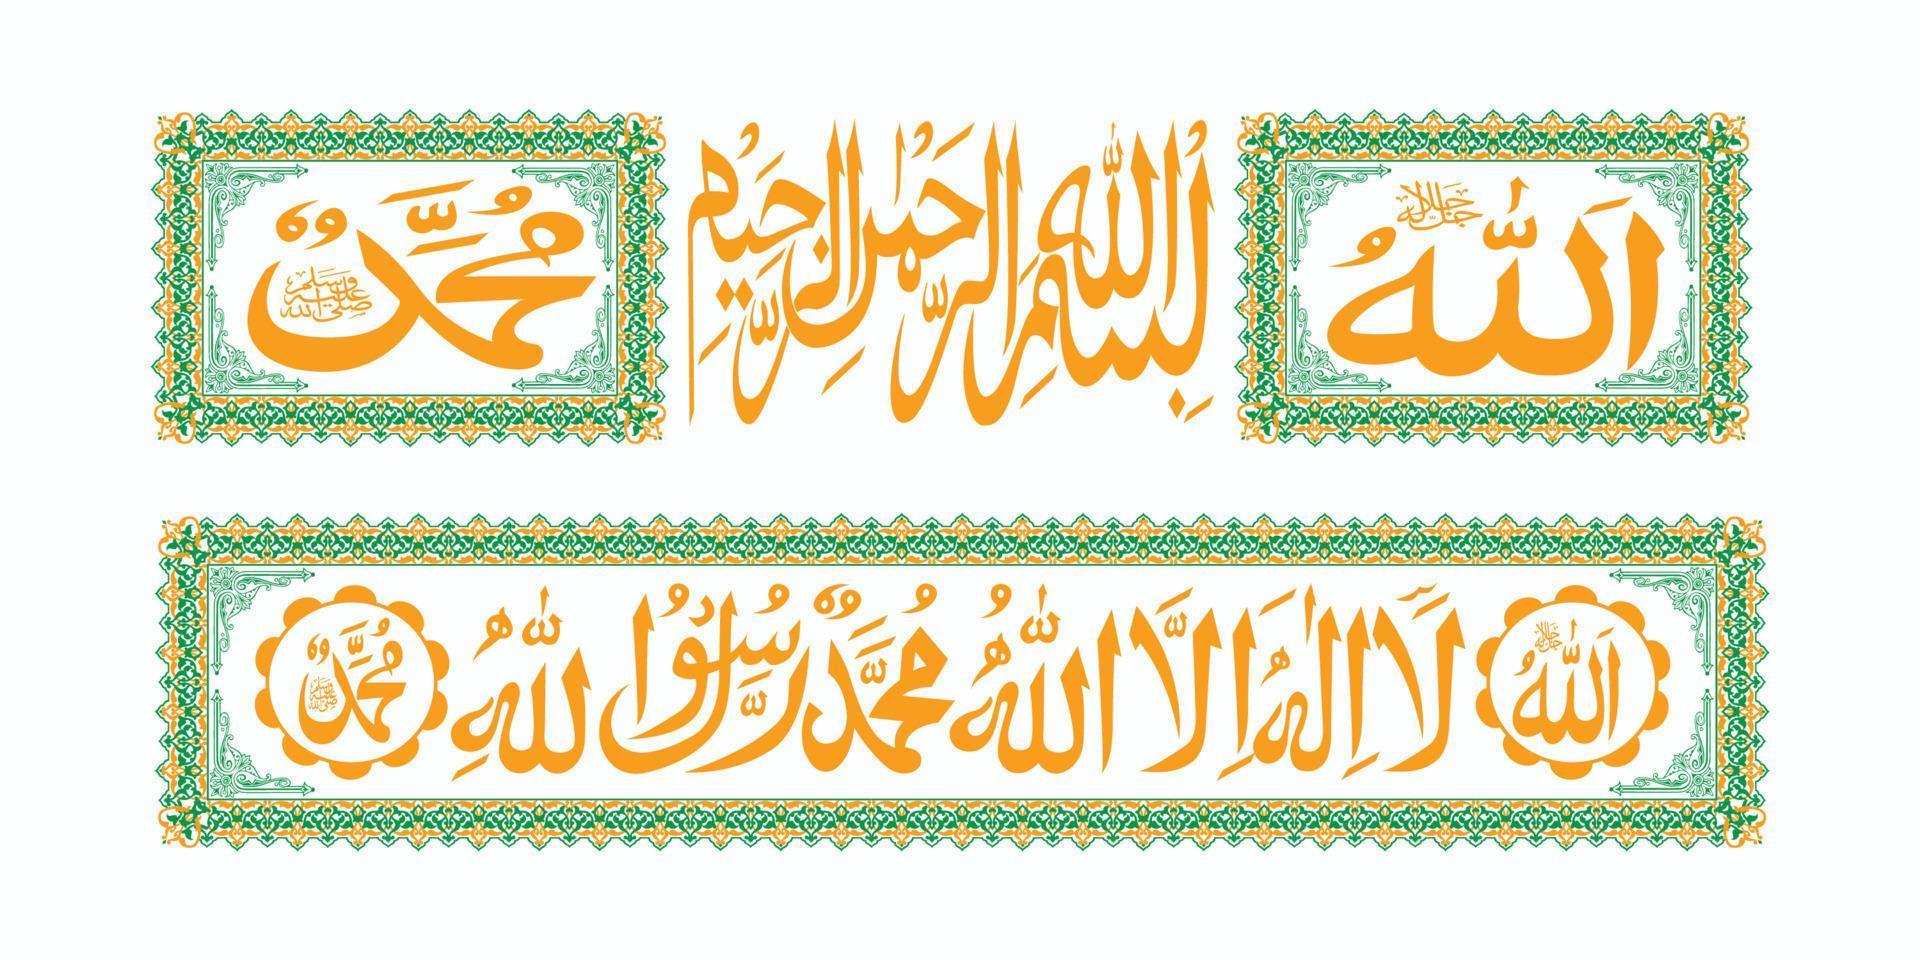 arobic kalima, bismillah, allah muhammad caligrafía vector de borde de 2 colores